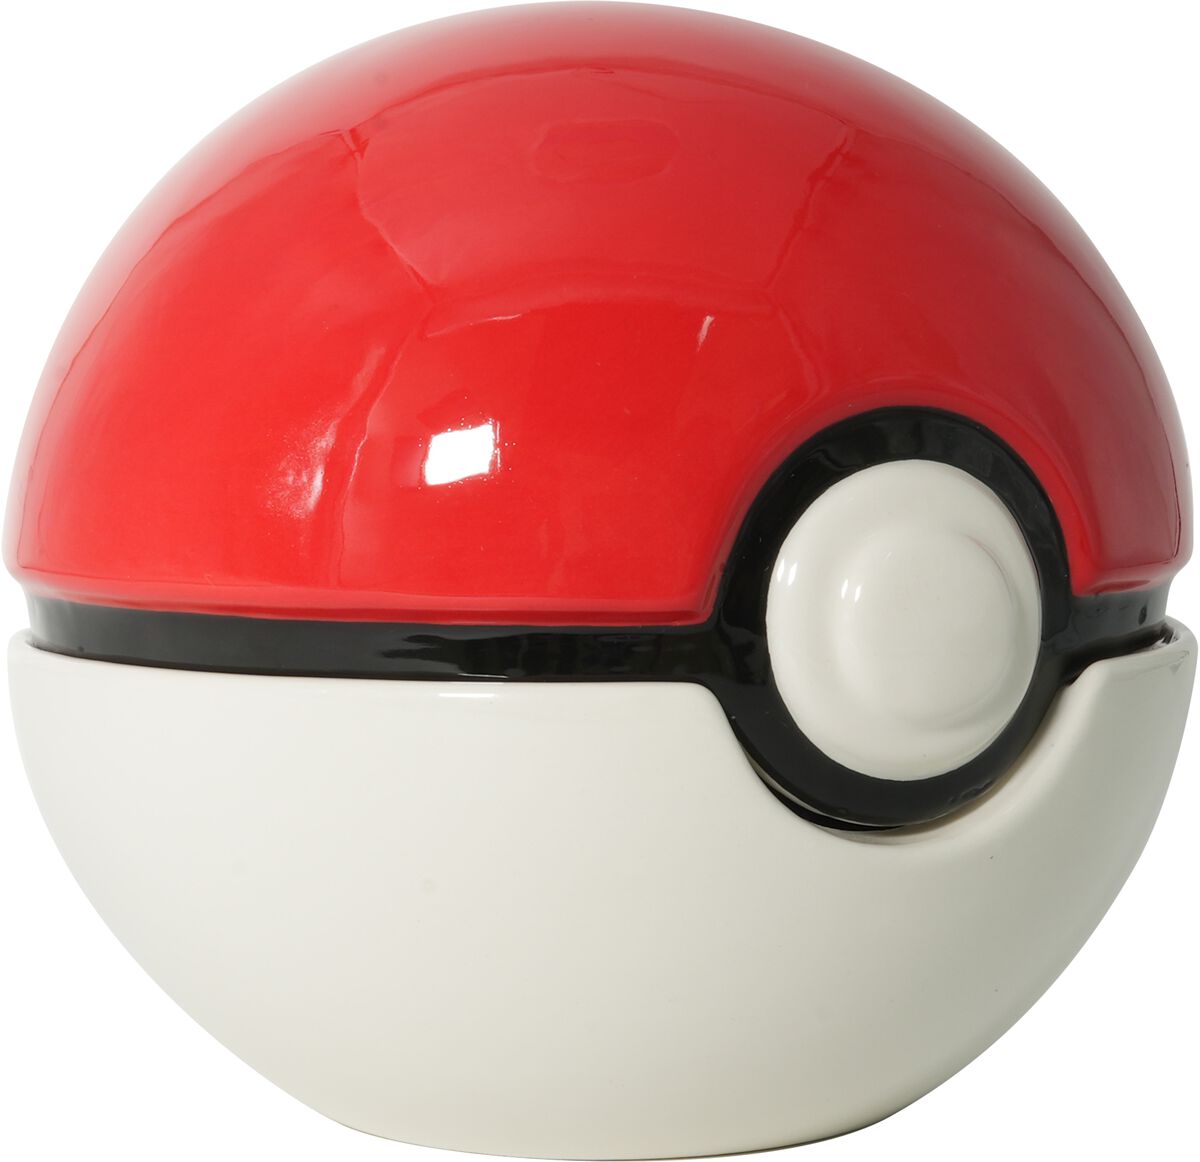 Pokémon - Gaming Keksdose - Pokeball Keksdose - rot/weiß/schwarz von Pokémon